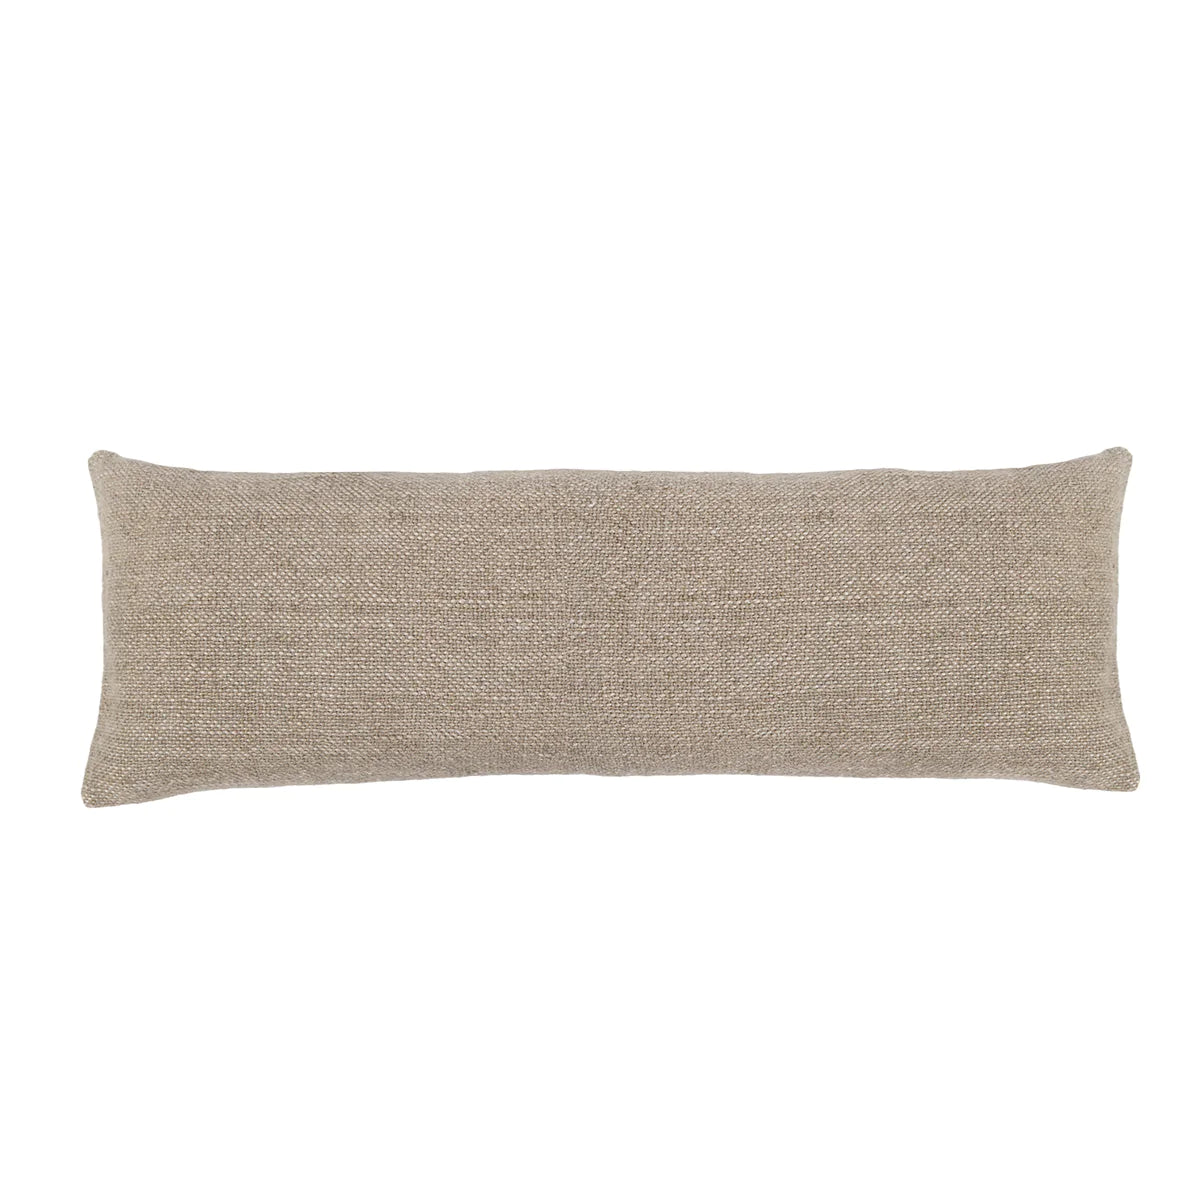 Hendrick Rectangular Pillow, Sand